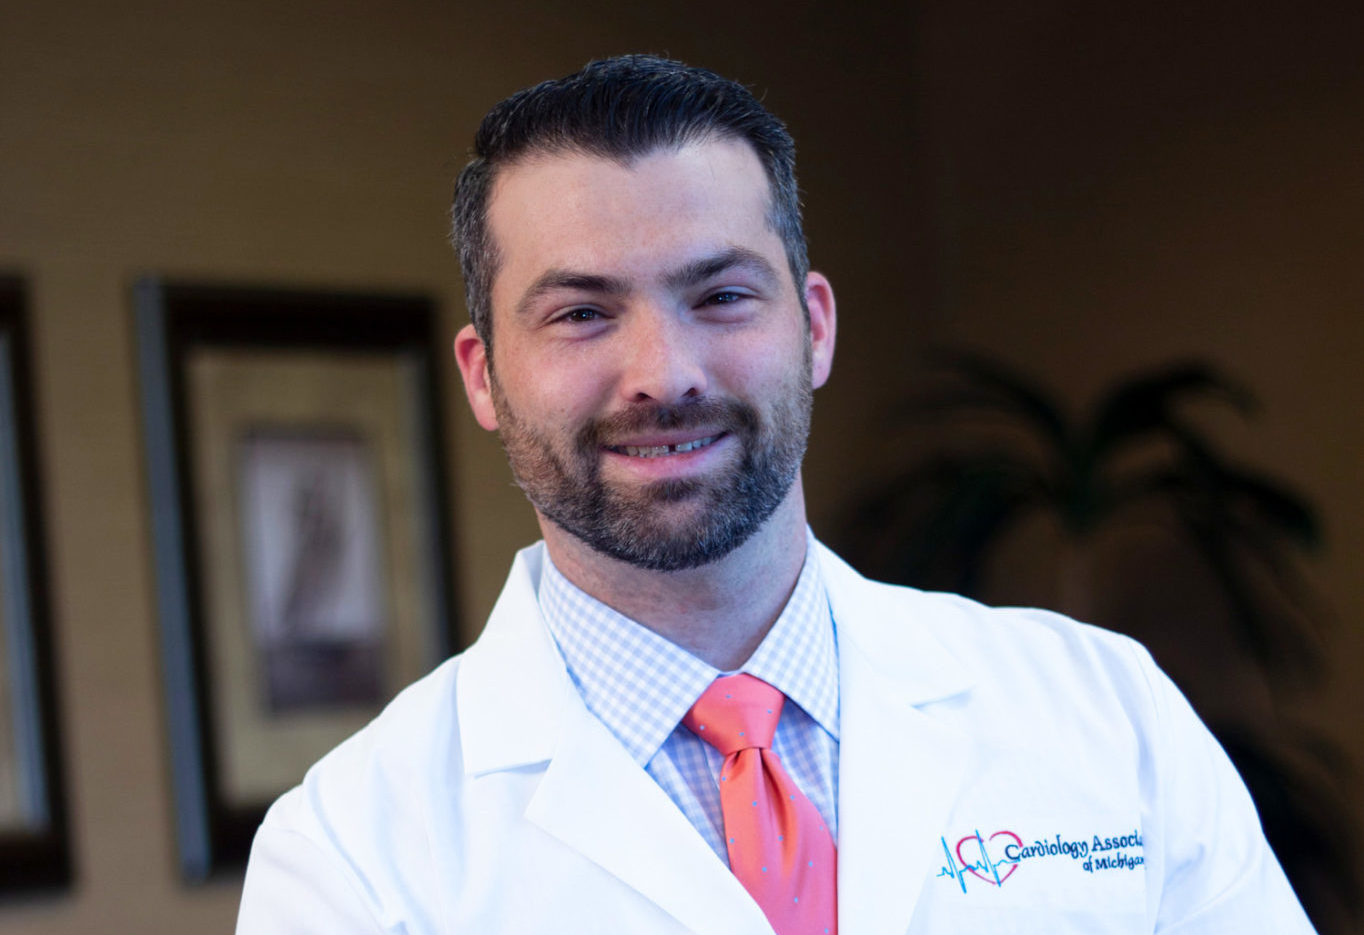 Cardiology Associates of Michigan's newest heart doctor is Matthew Edwards, D.O.